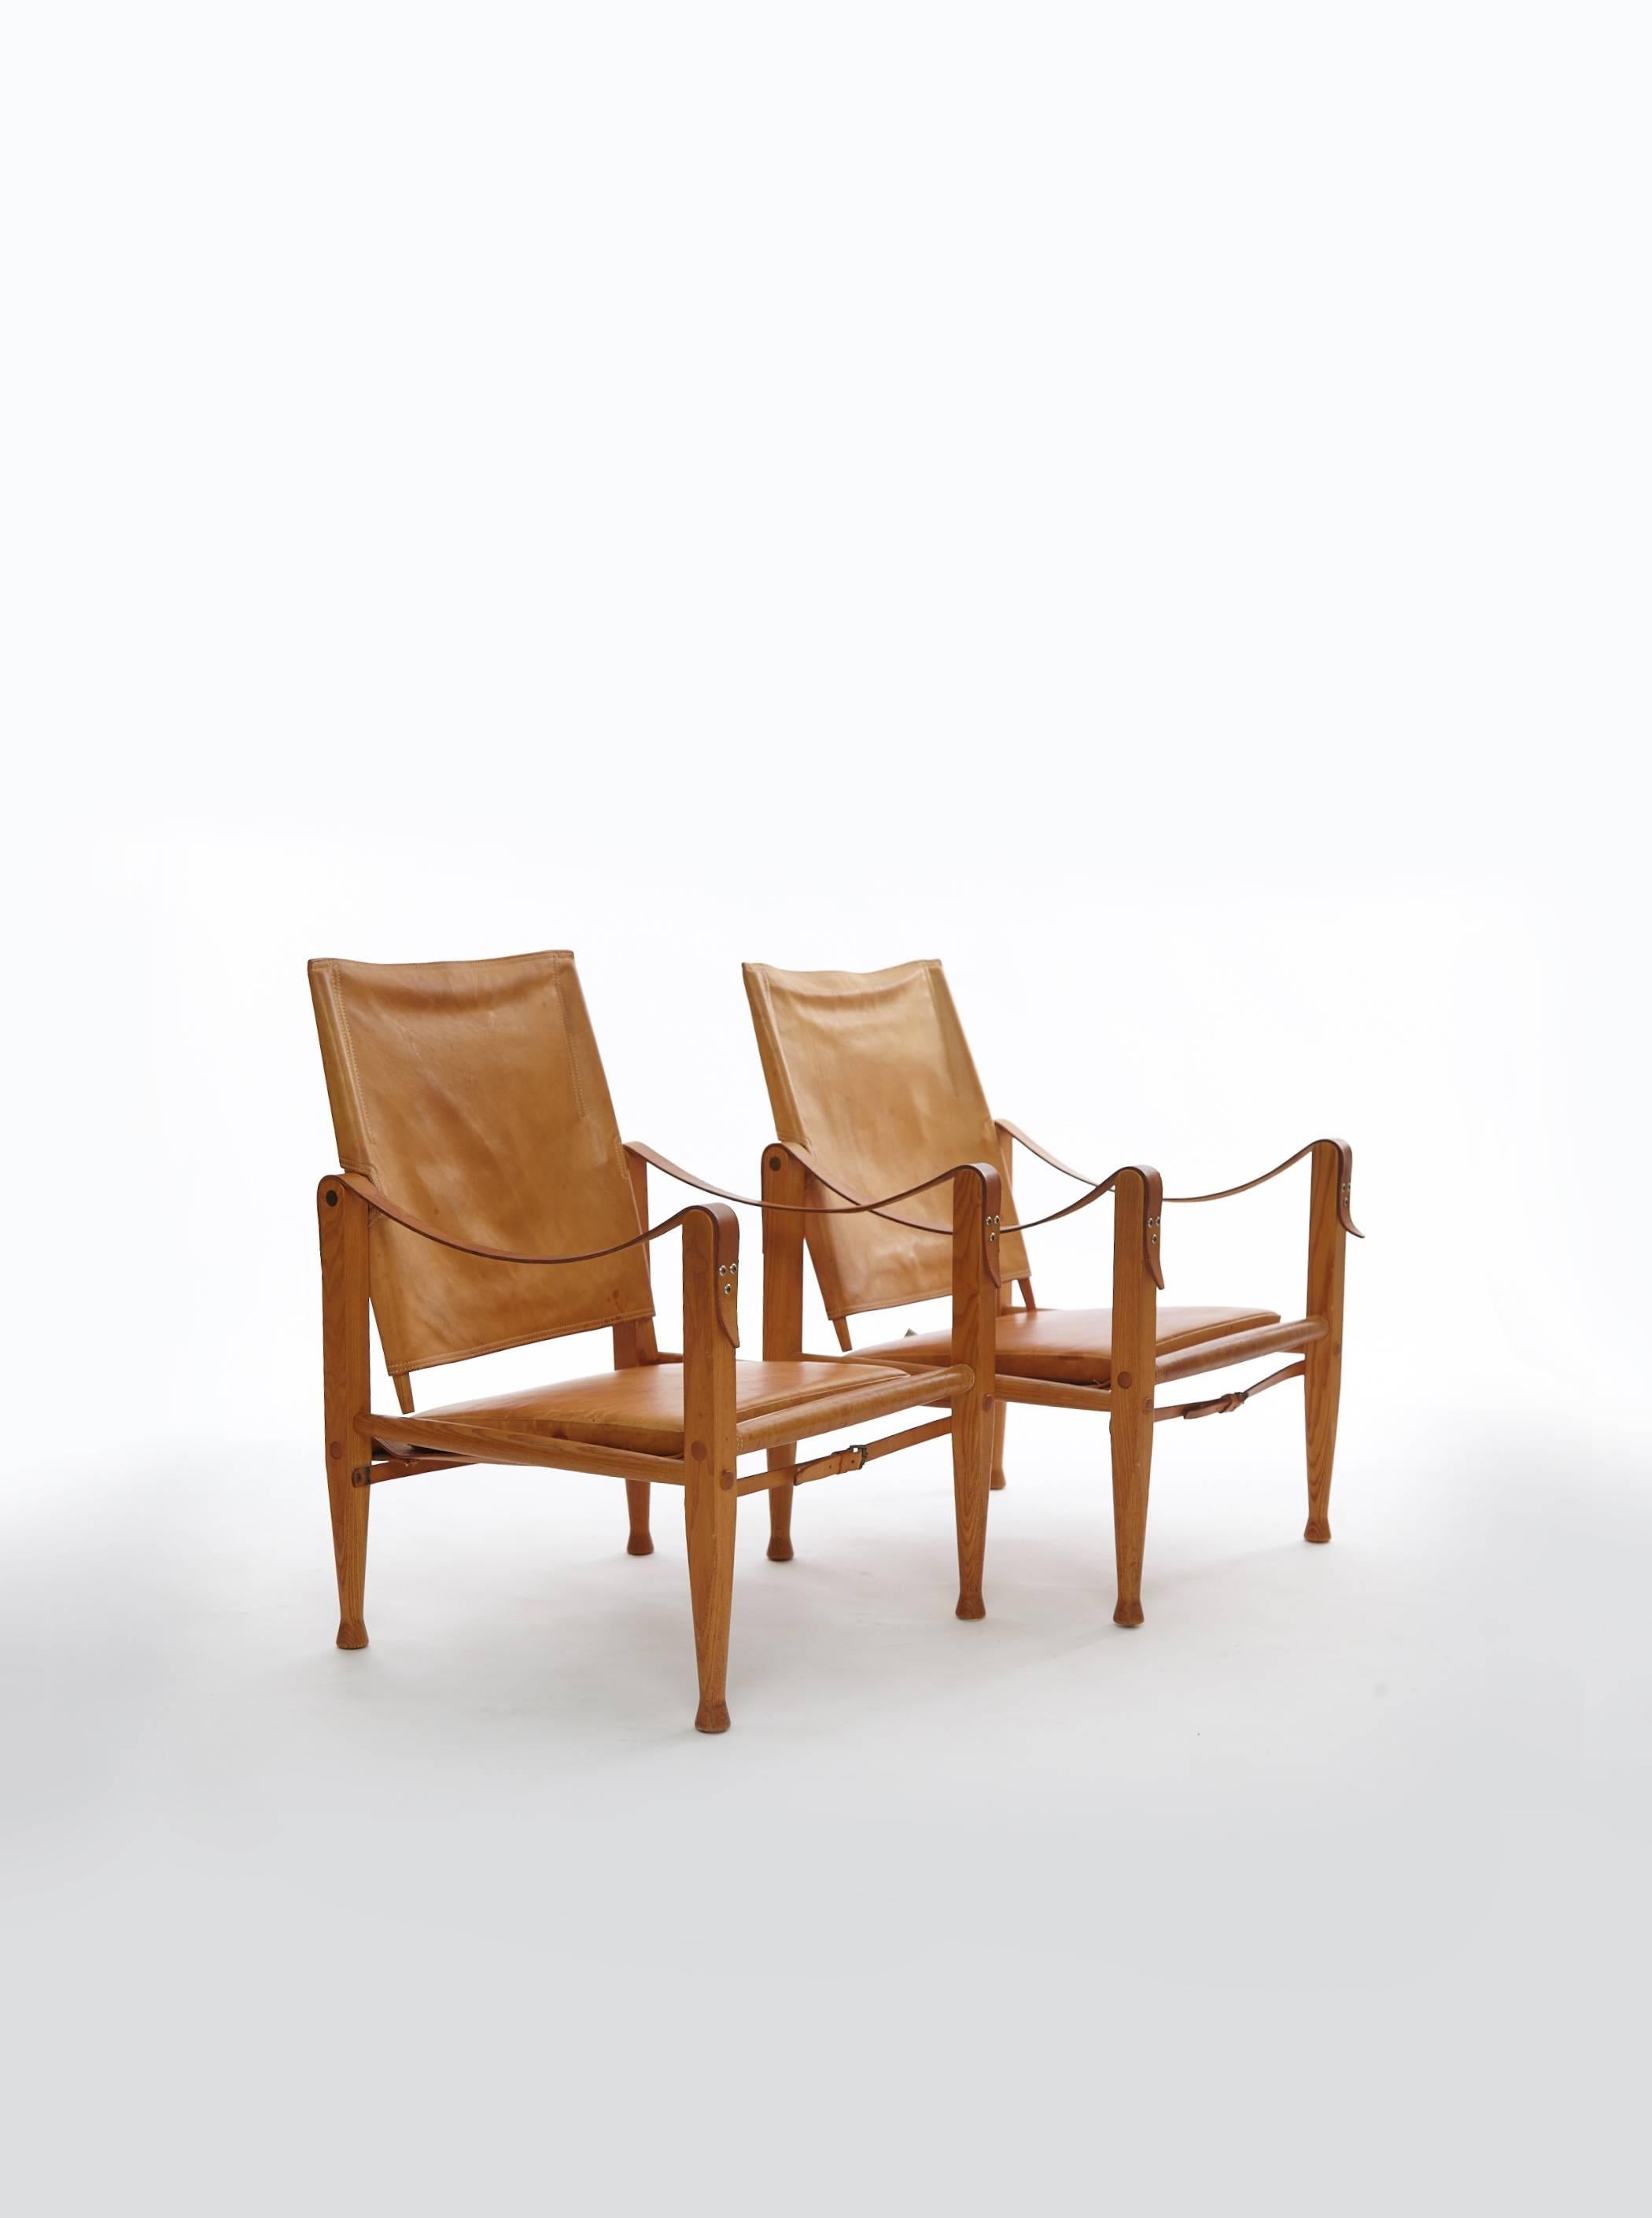 A pair of Kaare Klint safari chairs, made by Rud Rasmussen, Denmark. Tan/cognac leather and ashwood.